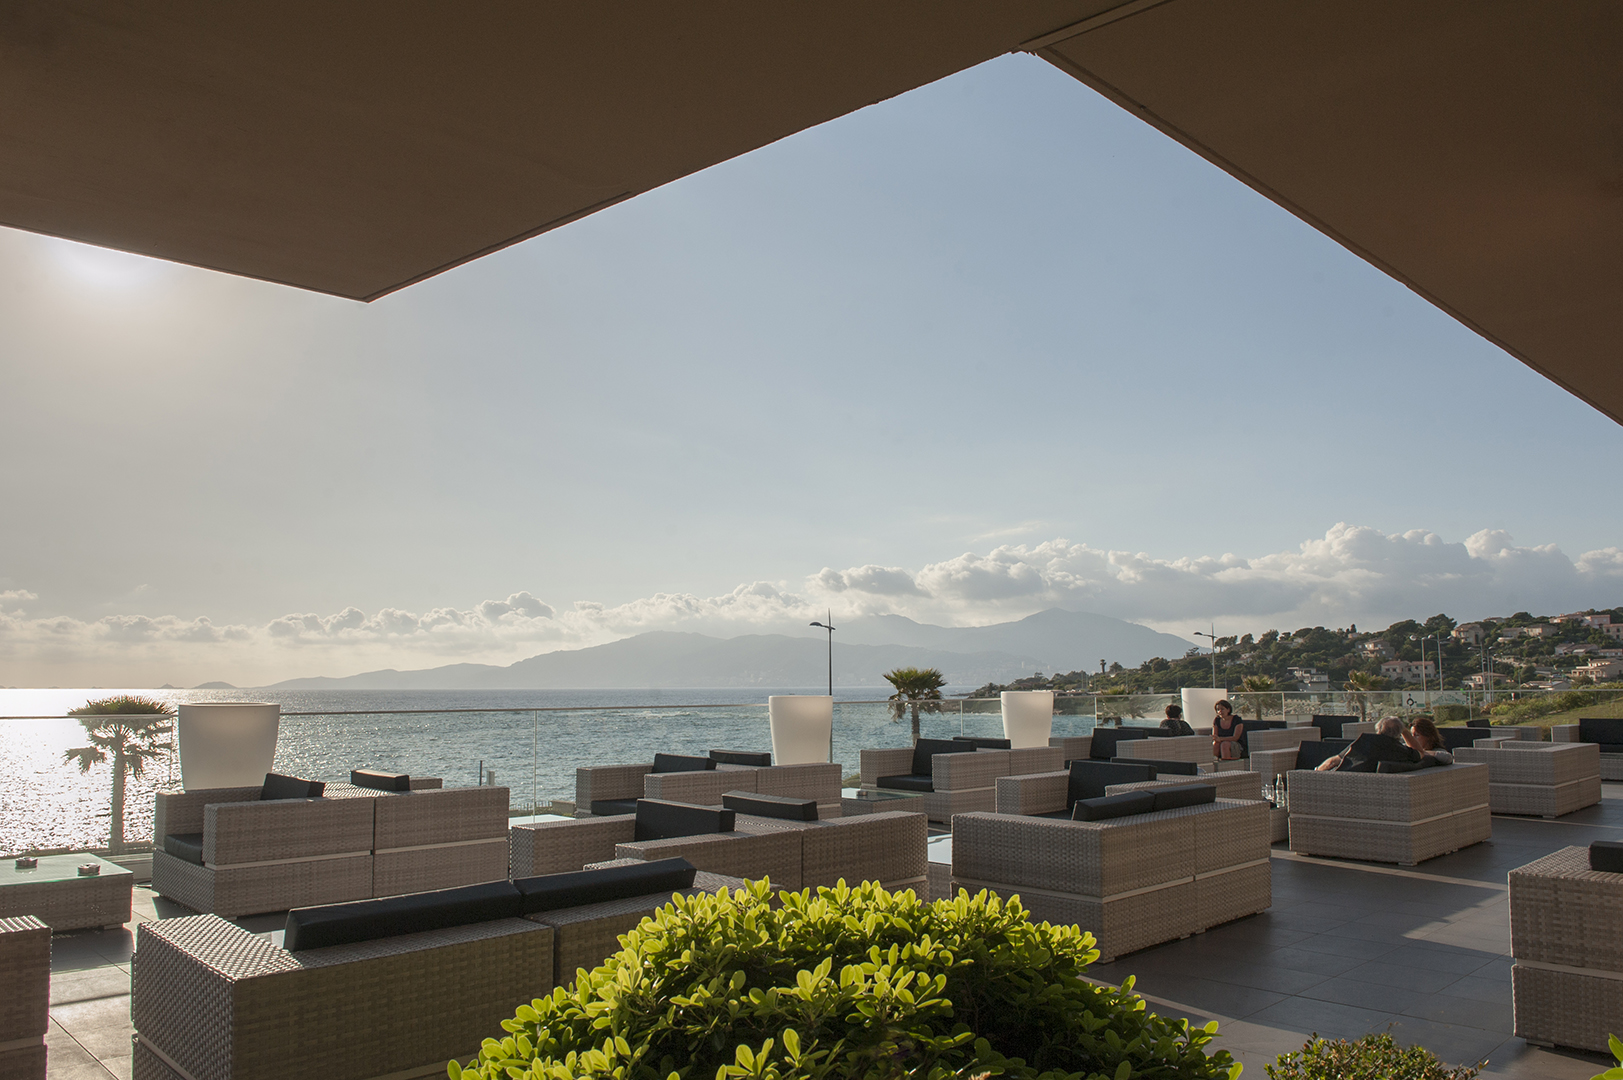 France - Corse - Porticcio - Hôtel Radisson Blu Resort & Spa 4* avec vols vacances